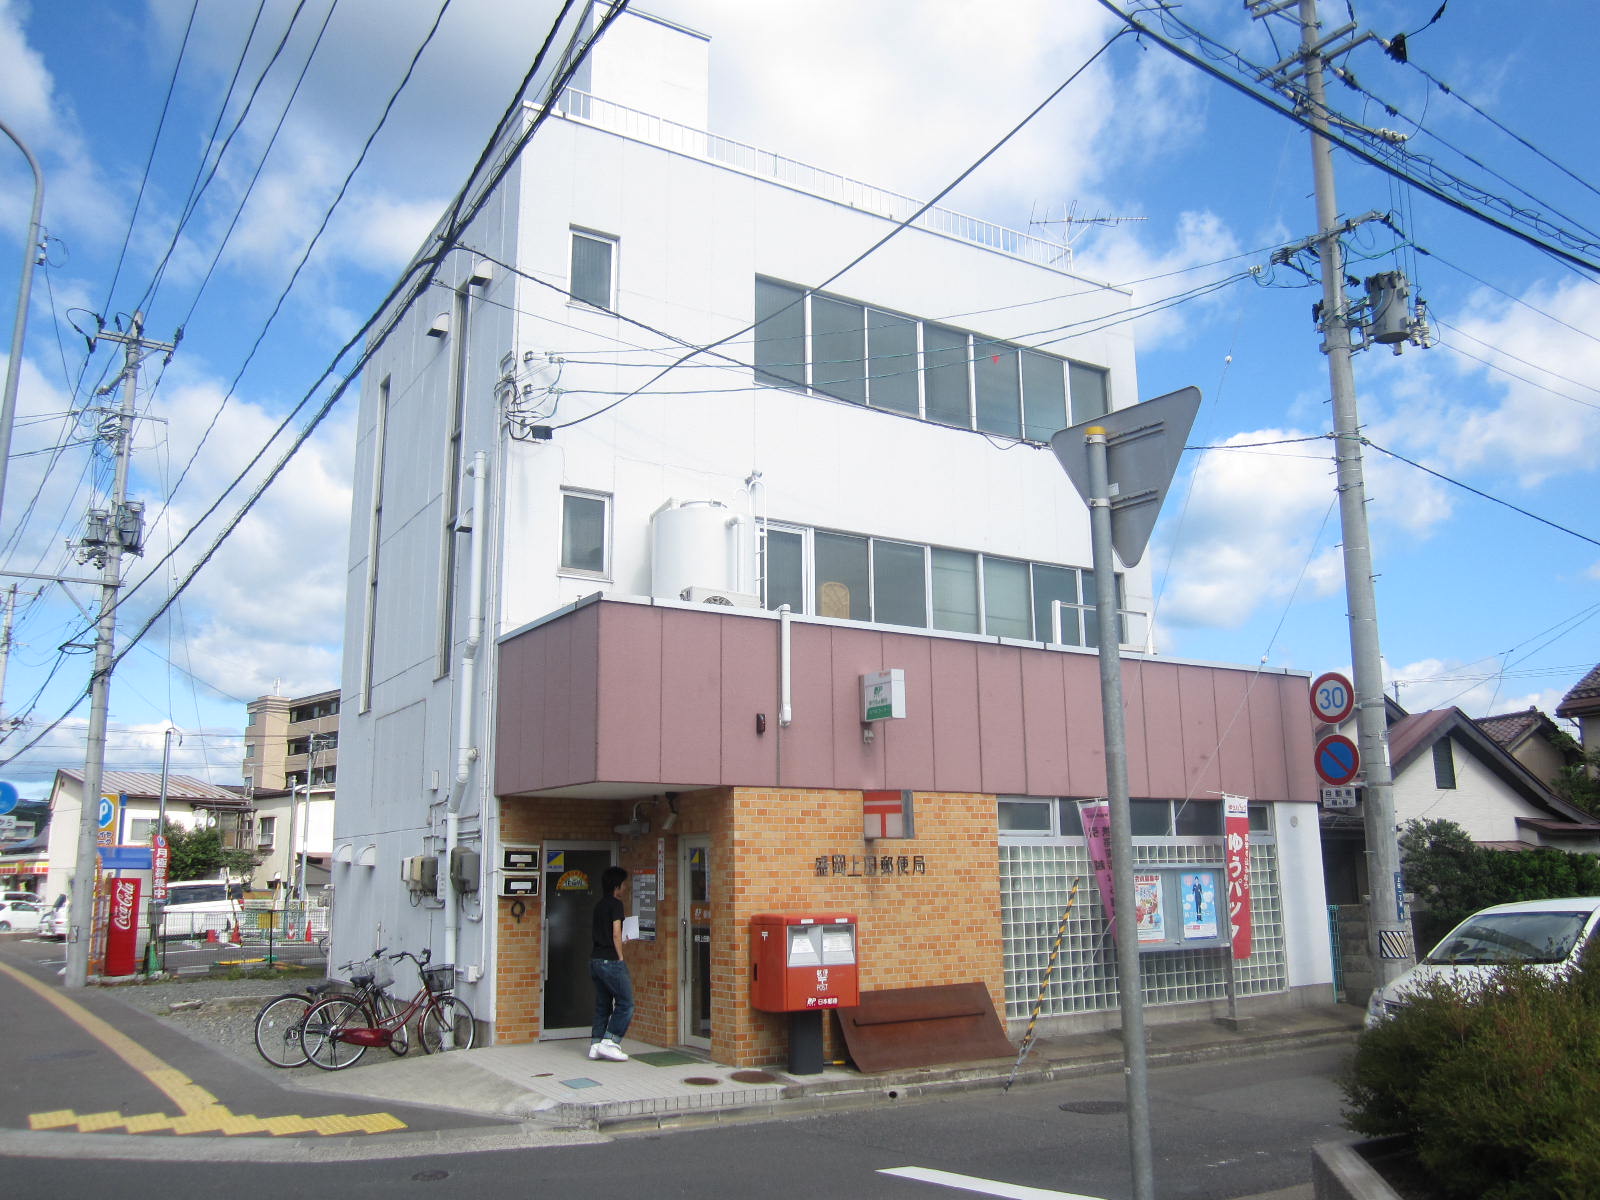 post office. 406m to Morioka Ueda post office (post office)